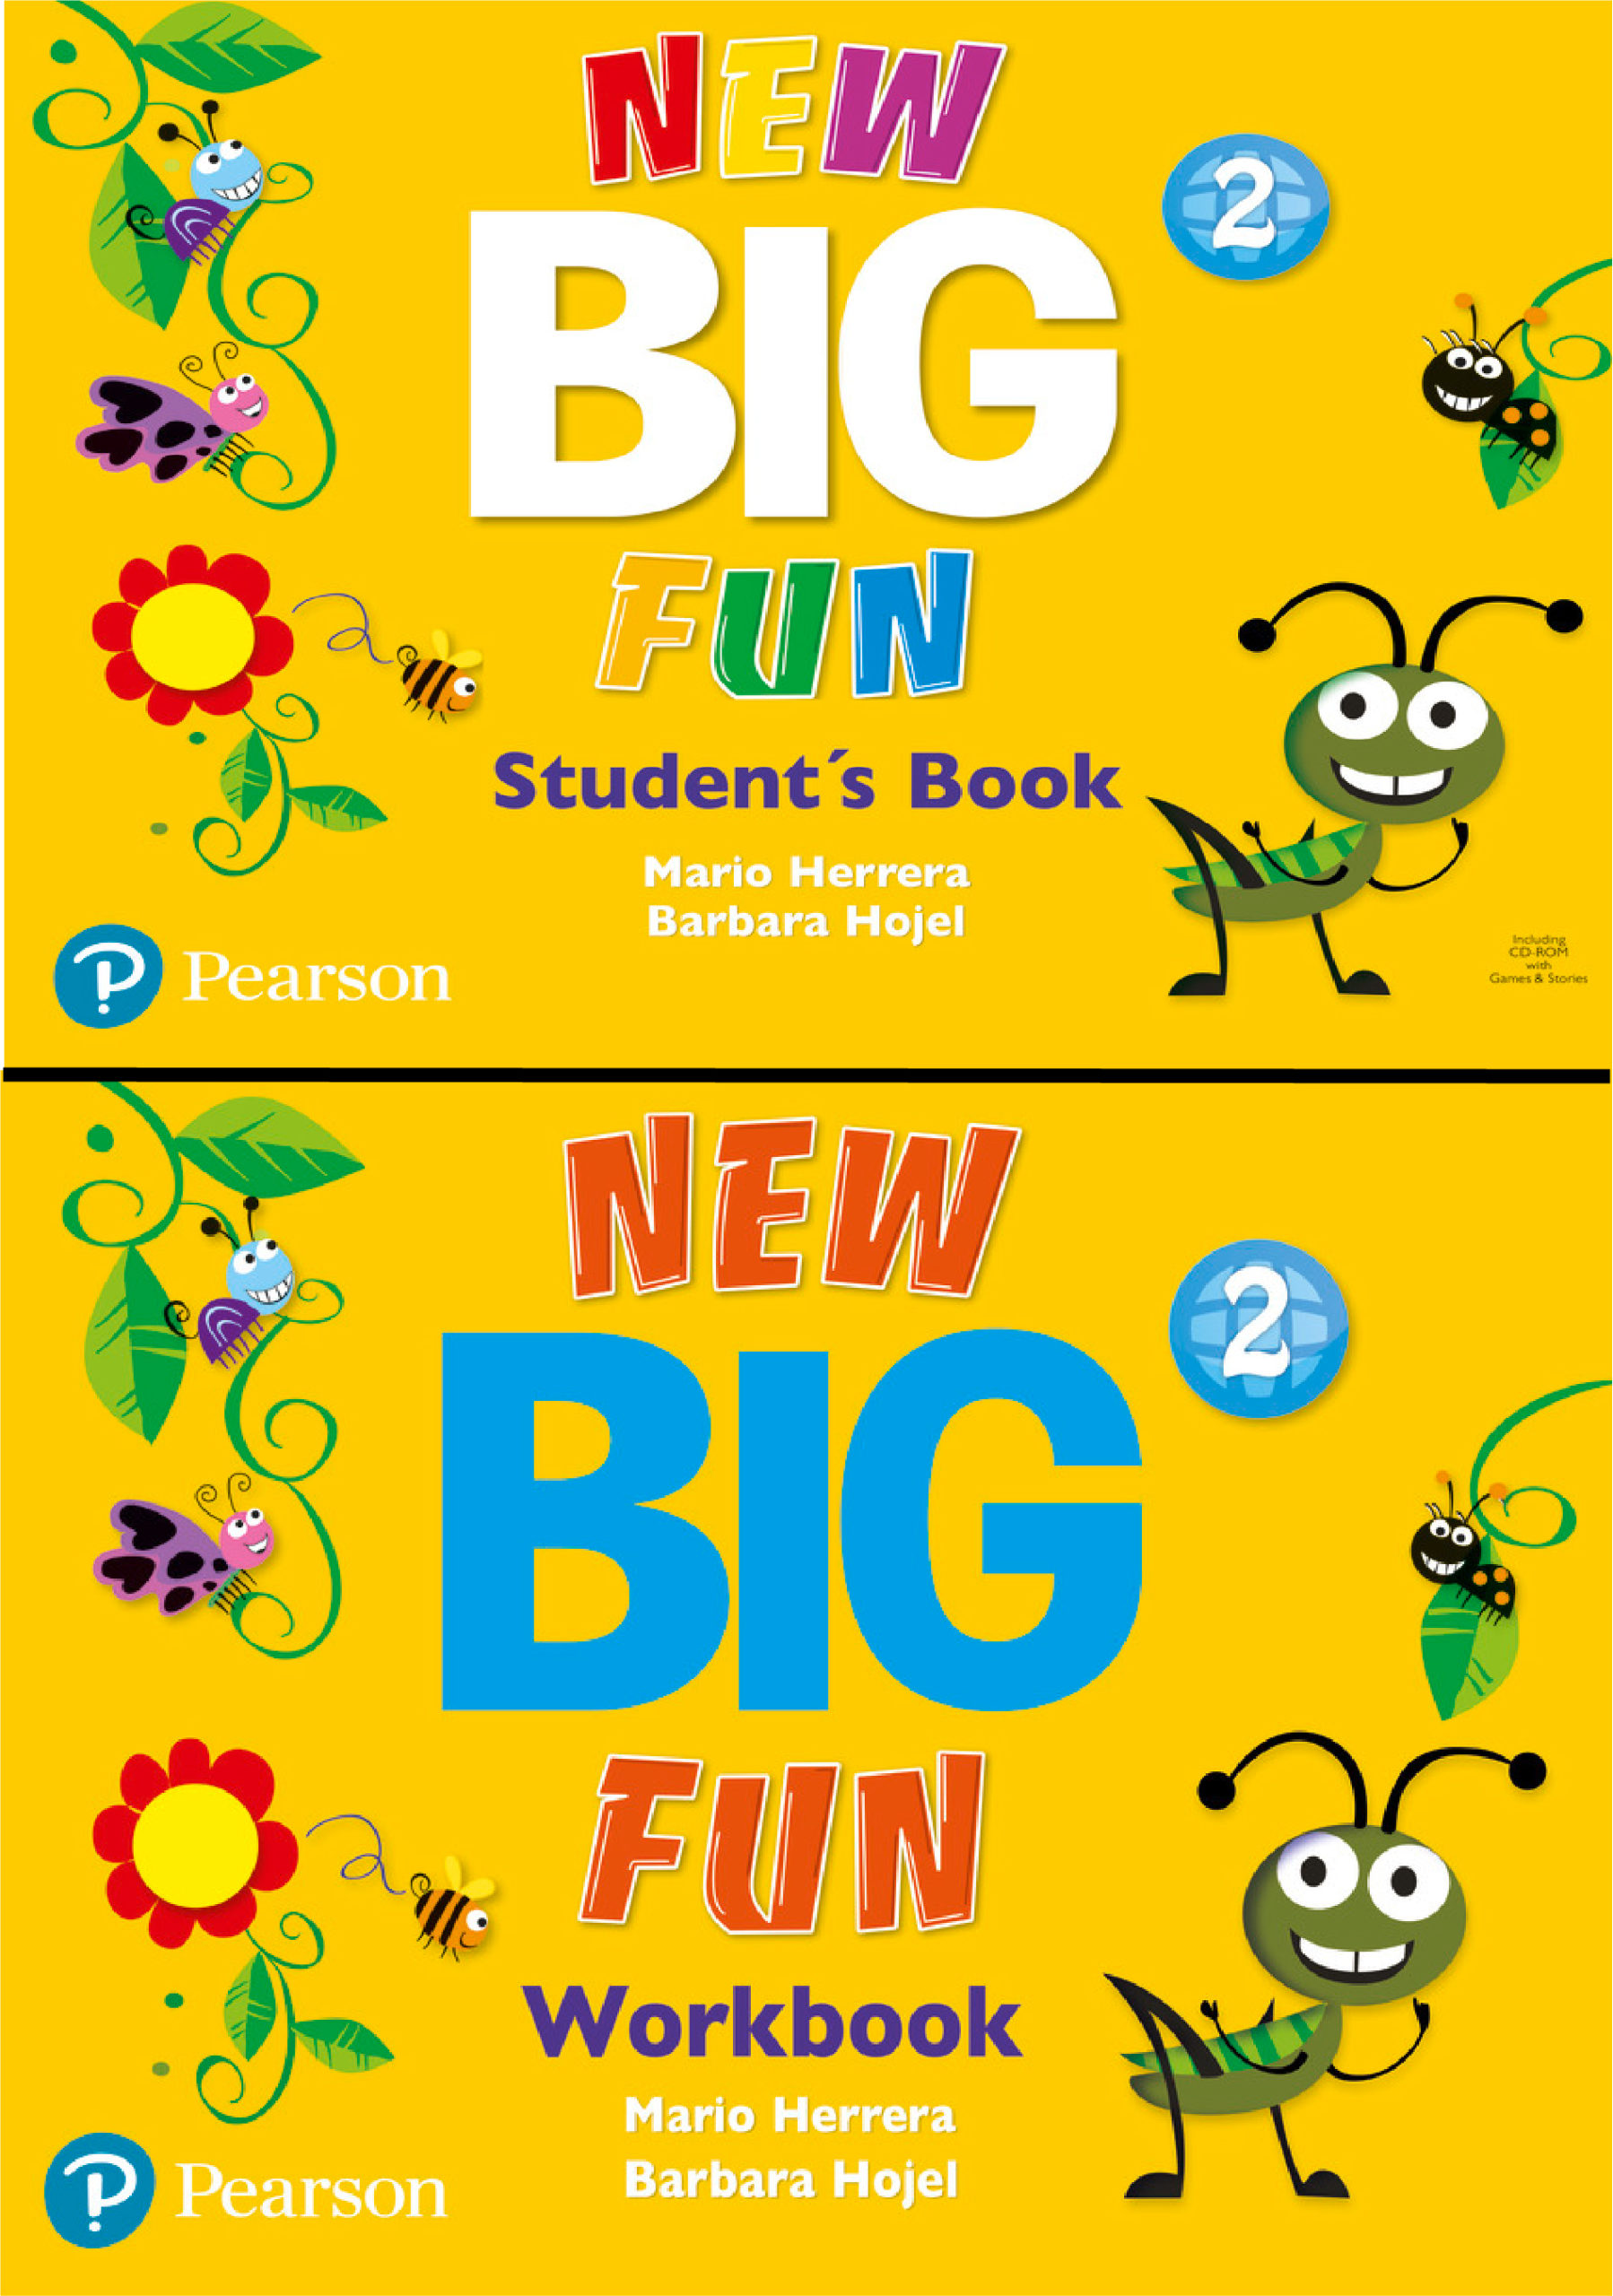 universal　CD　Refresh　Big　Student　Book　AUDIO　WORKBOOK　and　CD-ROM　pack　books　Fun　Level